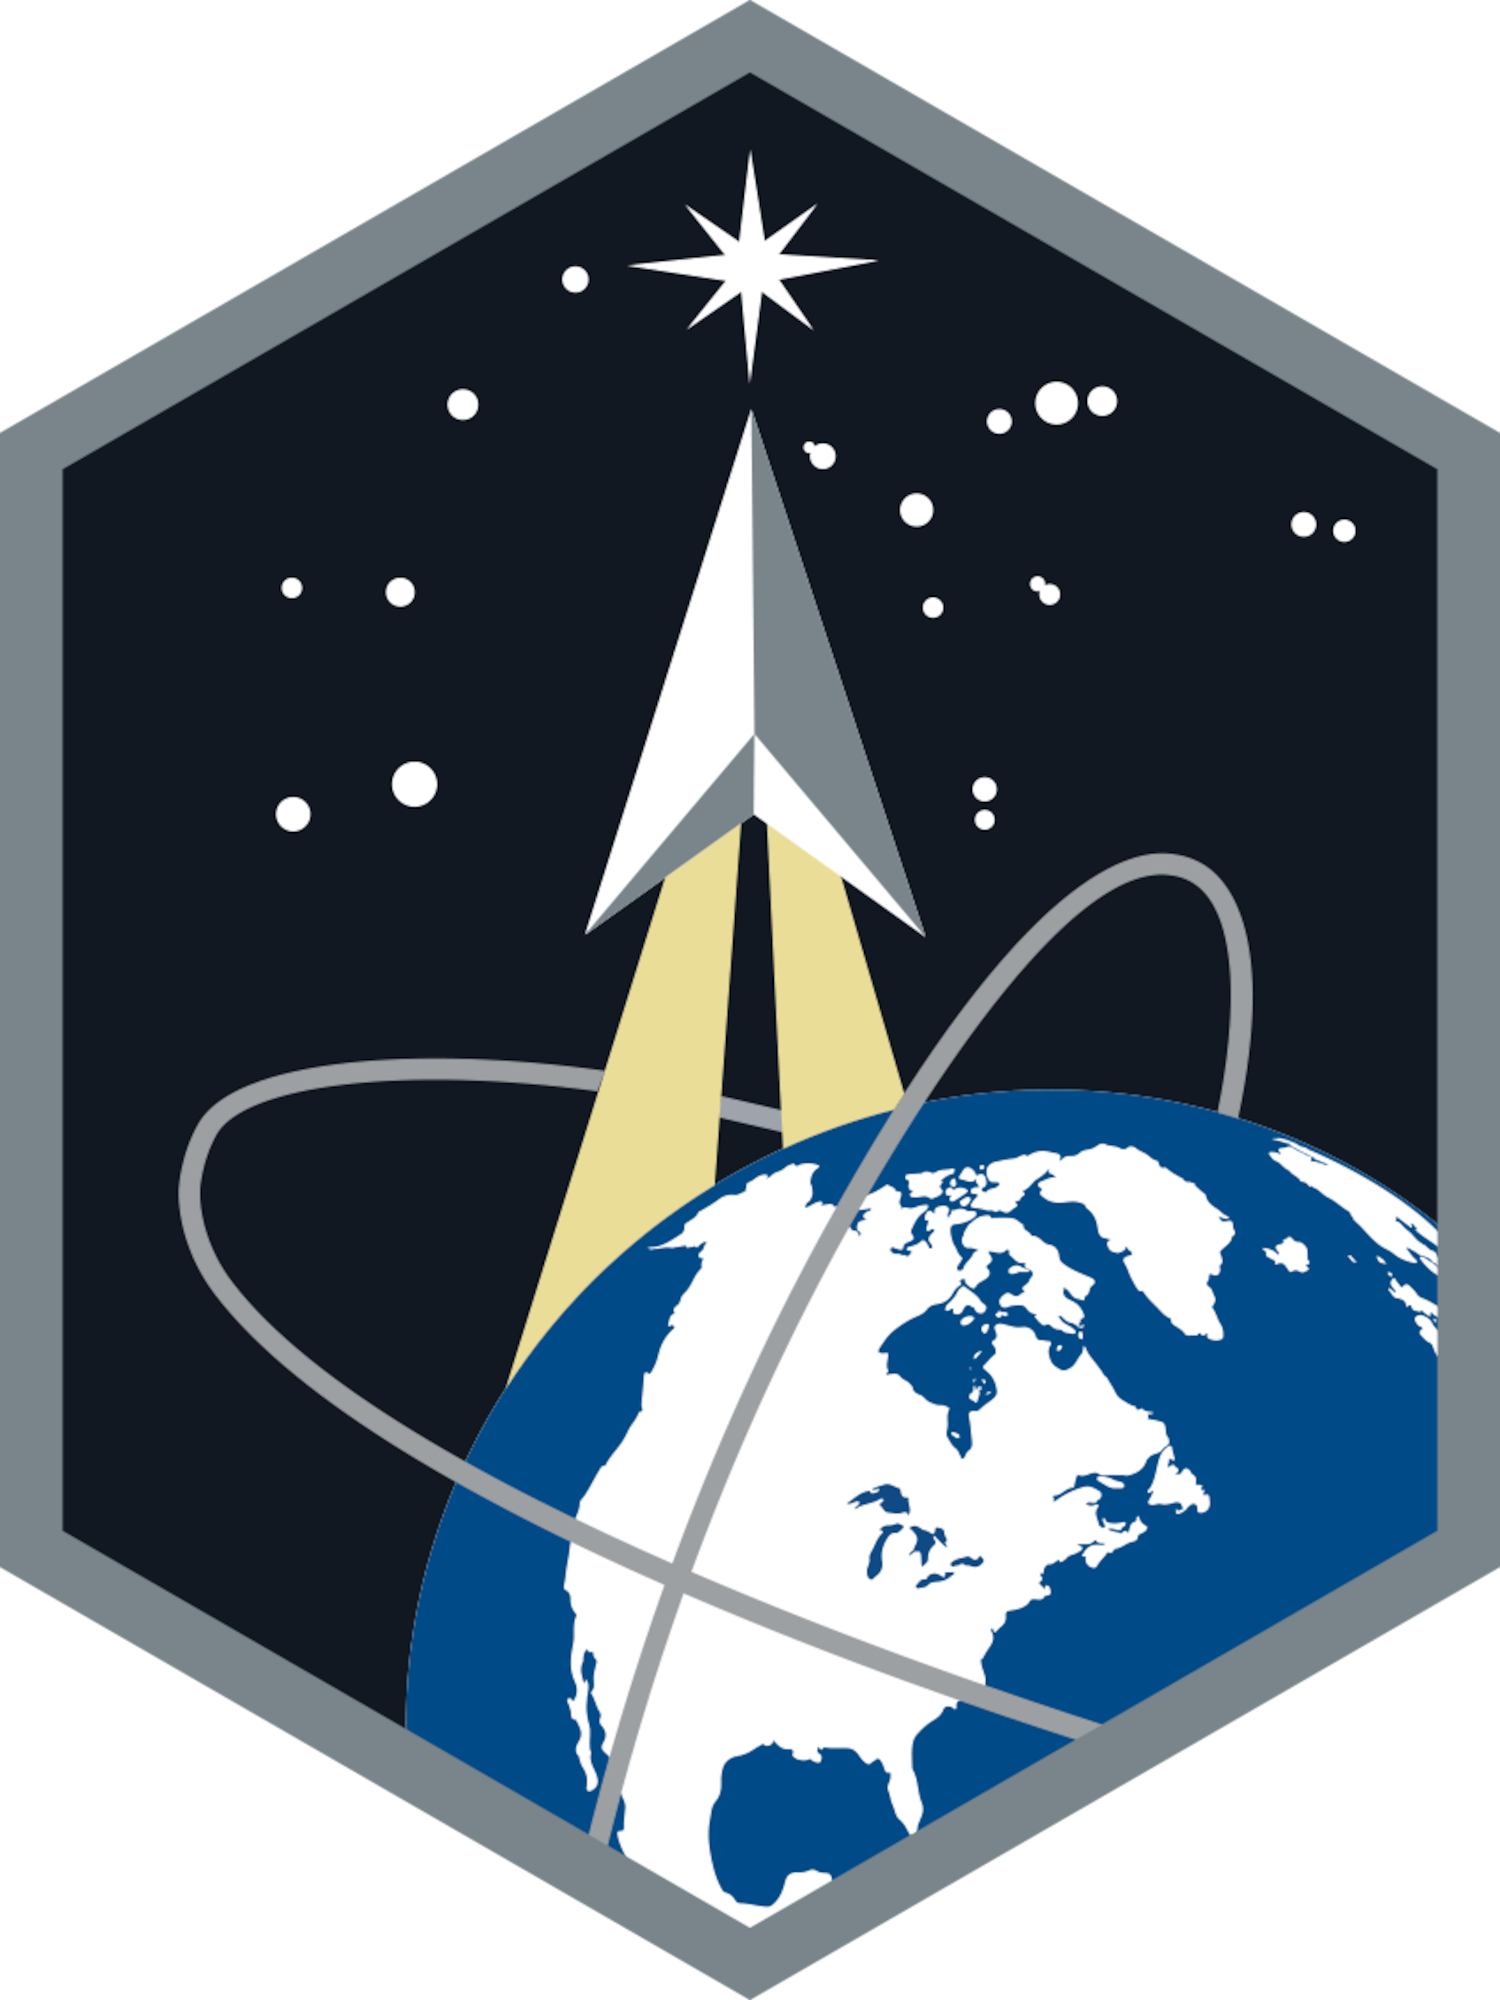 Space Base Delta 2 emblem